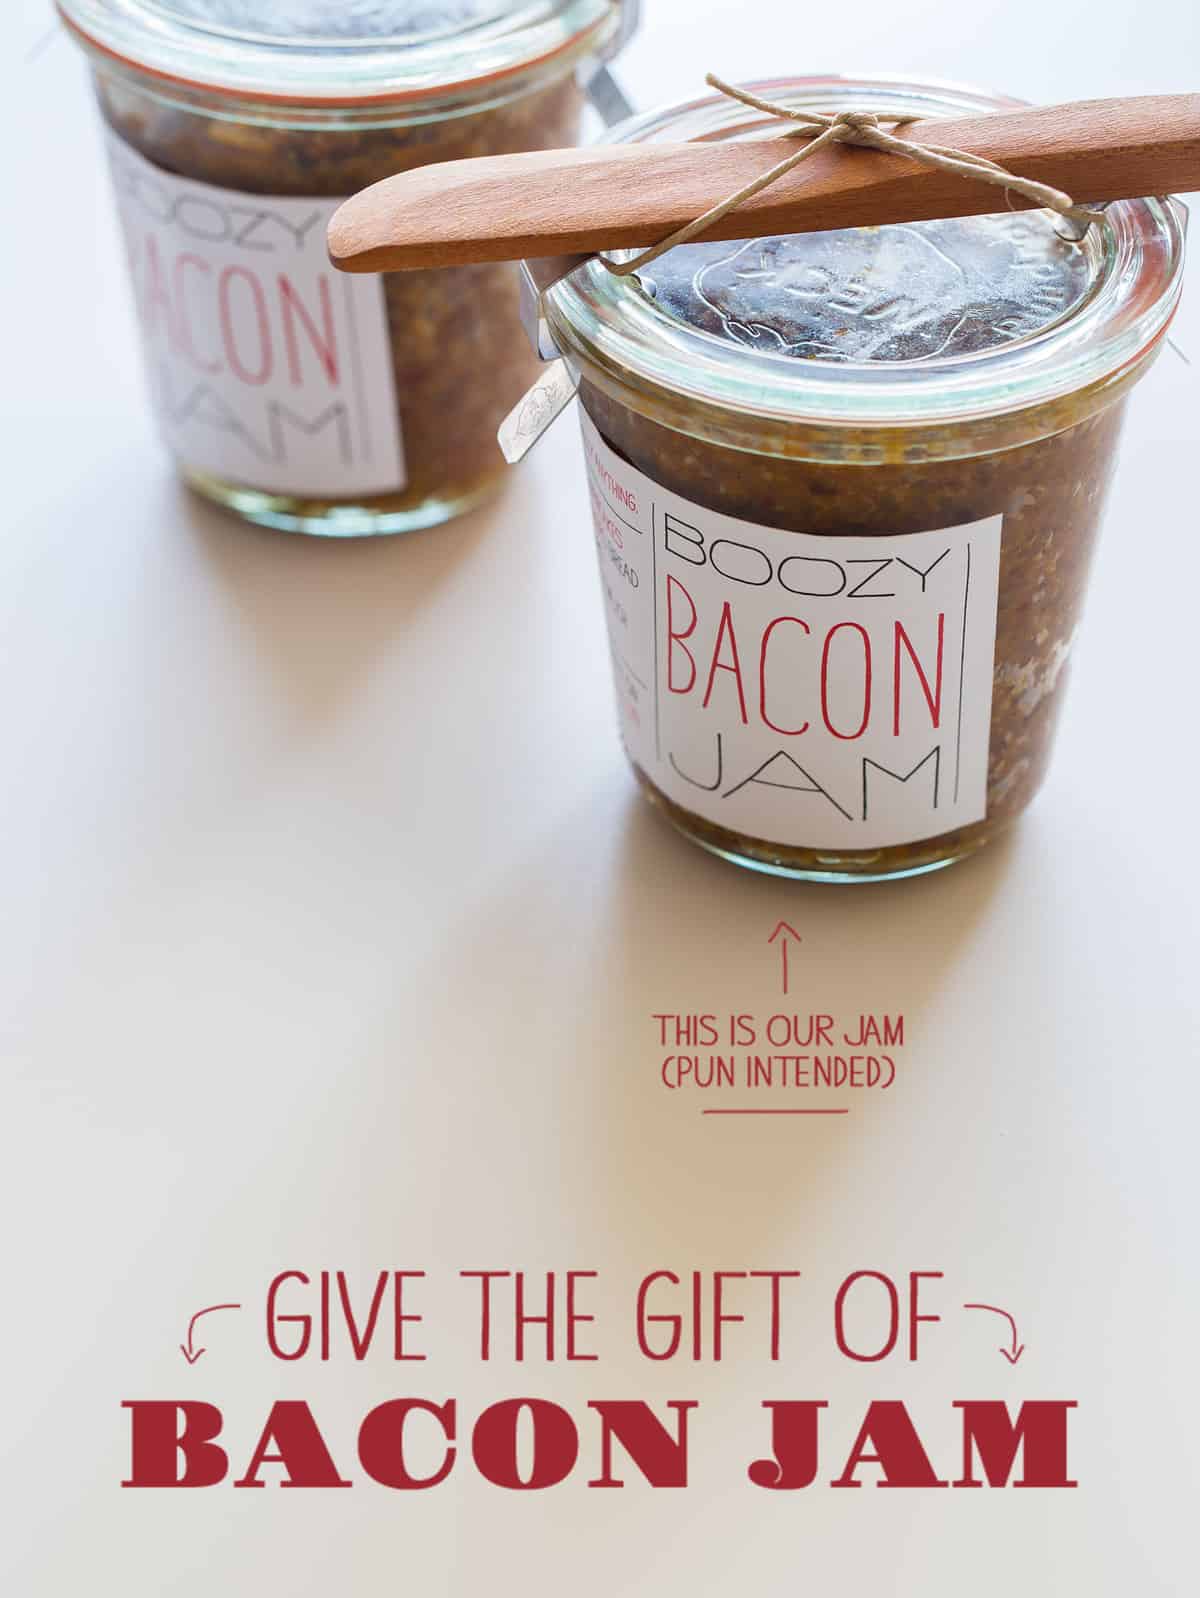 https://www.spoonforkbacon.com/wordpress/wp-content/uploads/2012/12/bacon-jam-gift.jpg